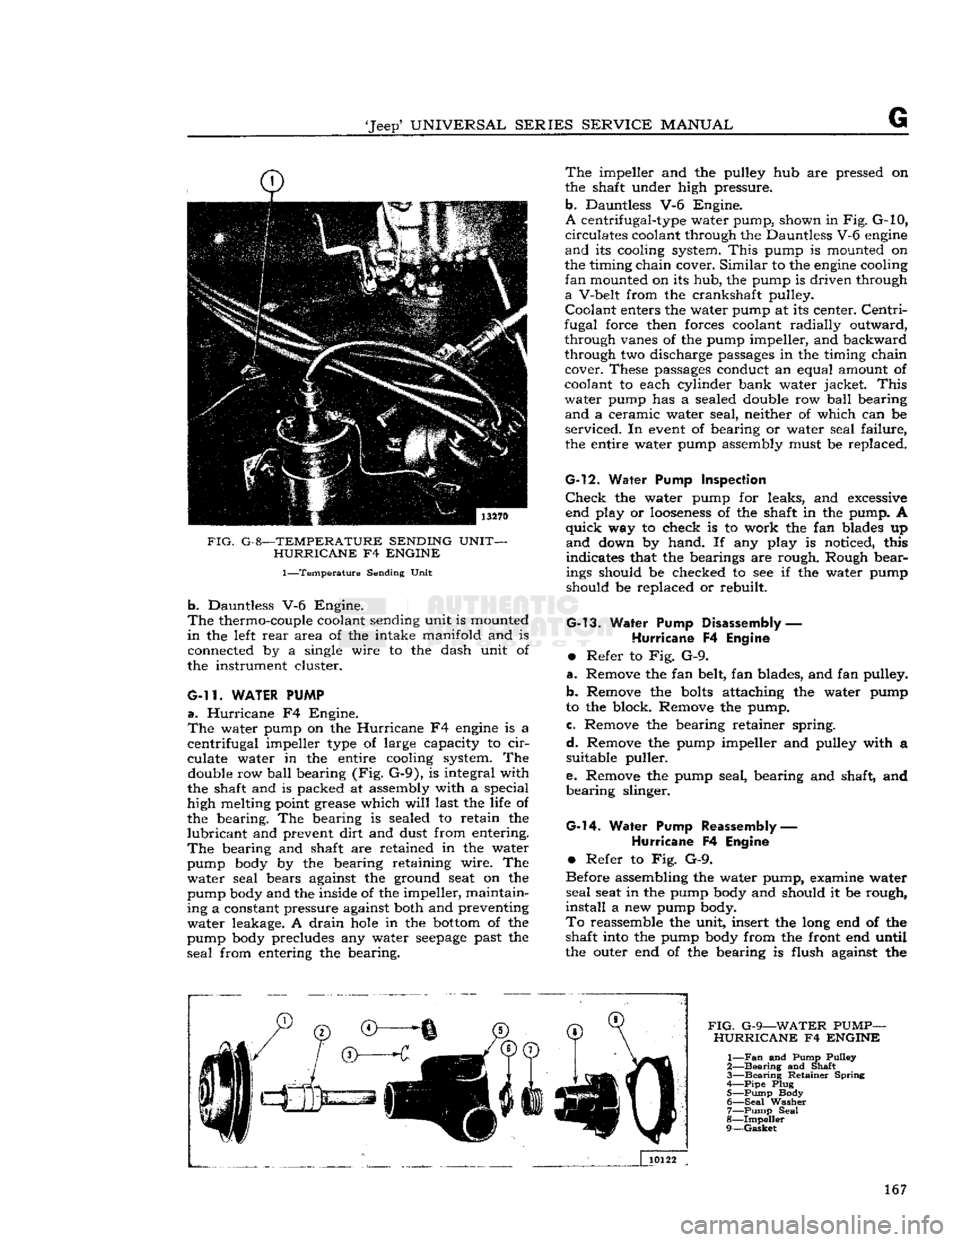 JEEP CJ 1953  Service Manual 
Jeep*
 UNIVERSAL
 SERIES
 SERVICE
 MANUAL 

FIG.
 G-8—TEMPERATURE SENDING UNIT- HURRICANE
 F4
 ENGINE 
 1—Temperature
 Sending Unit 

b.
 Dauntless V-6 Engine. 

The
 thermo-couple coolant sendi